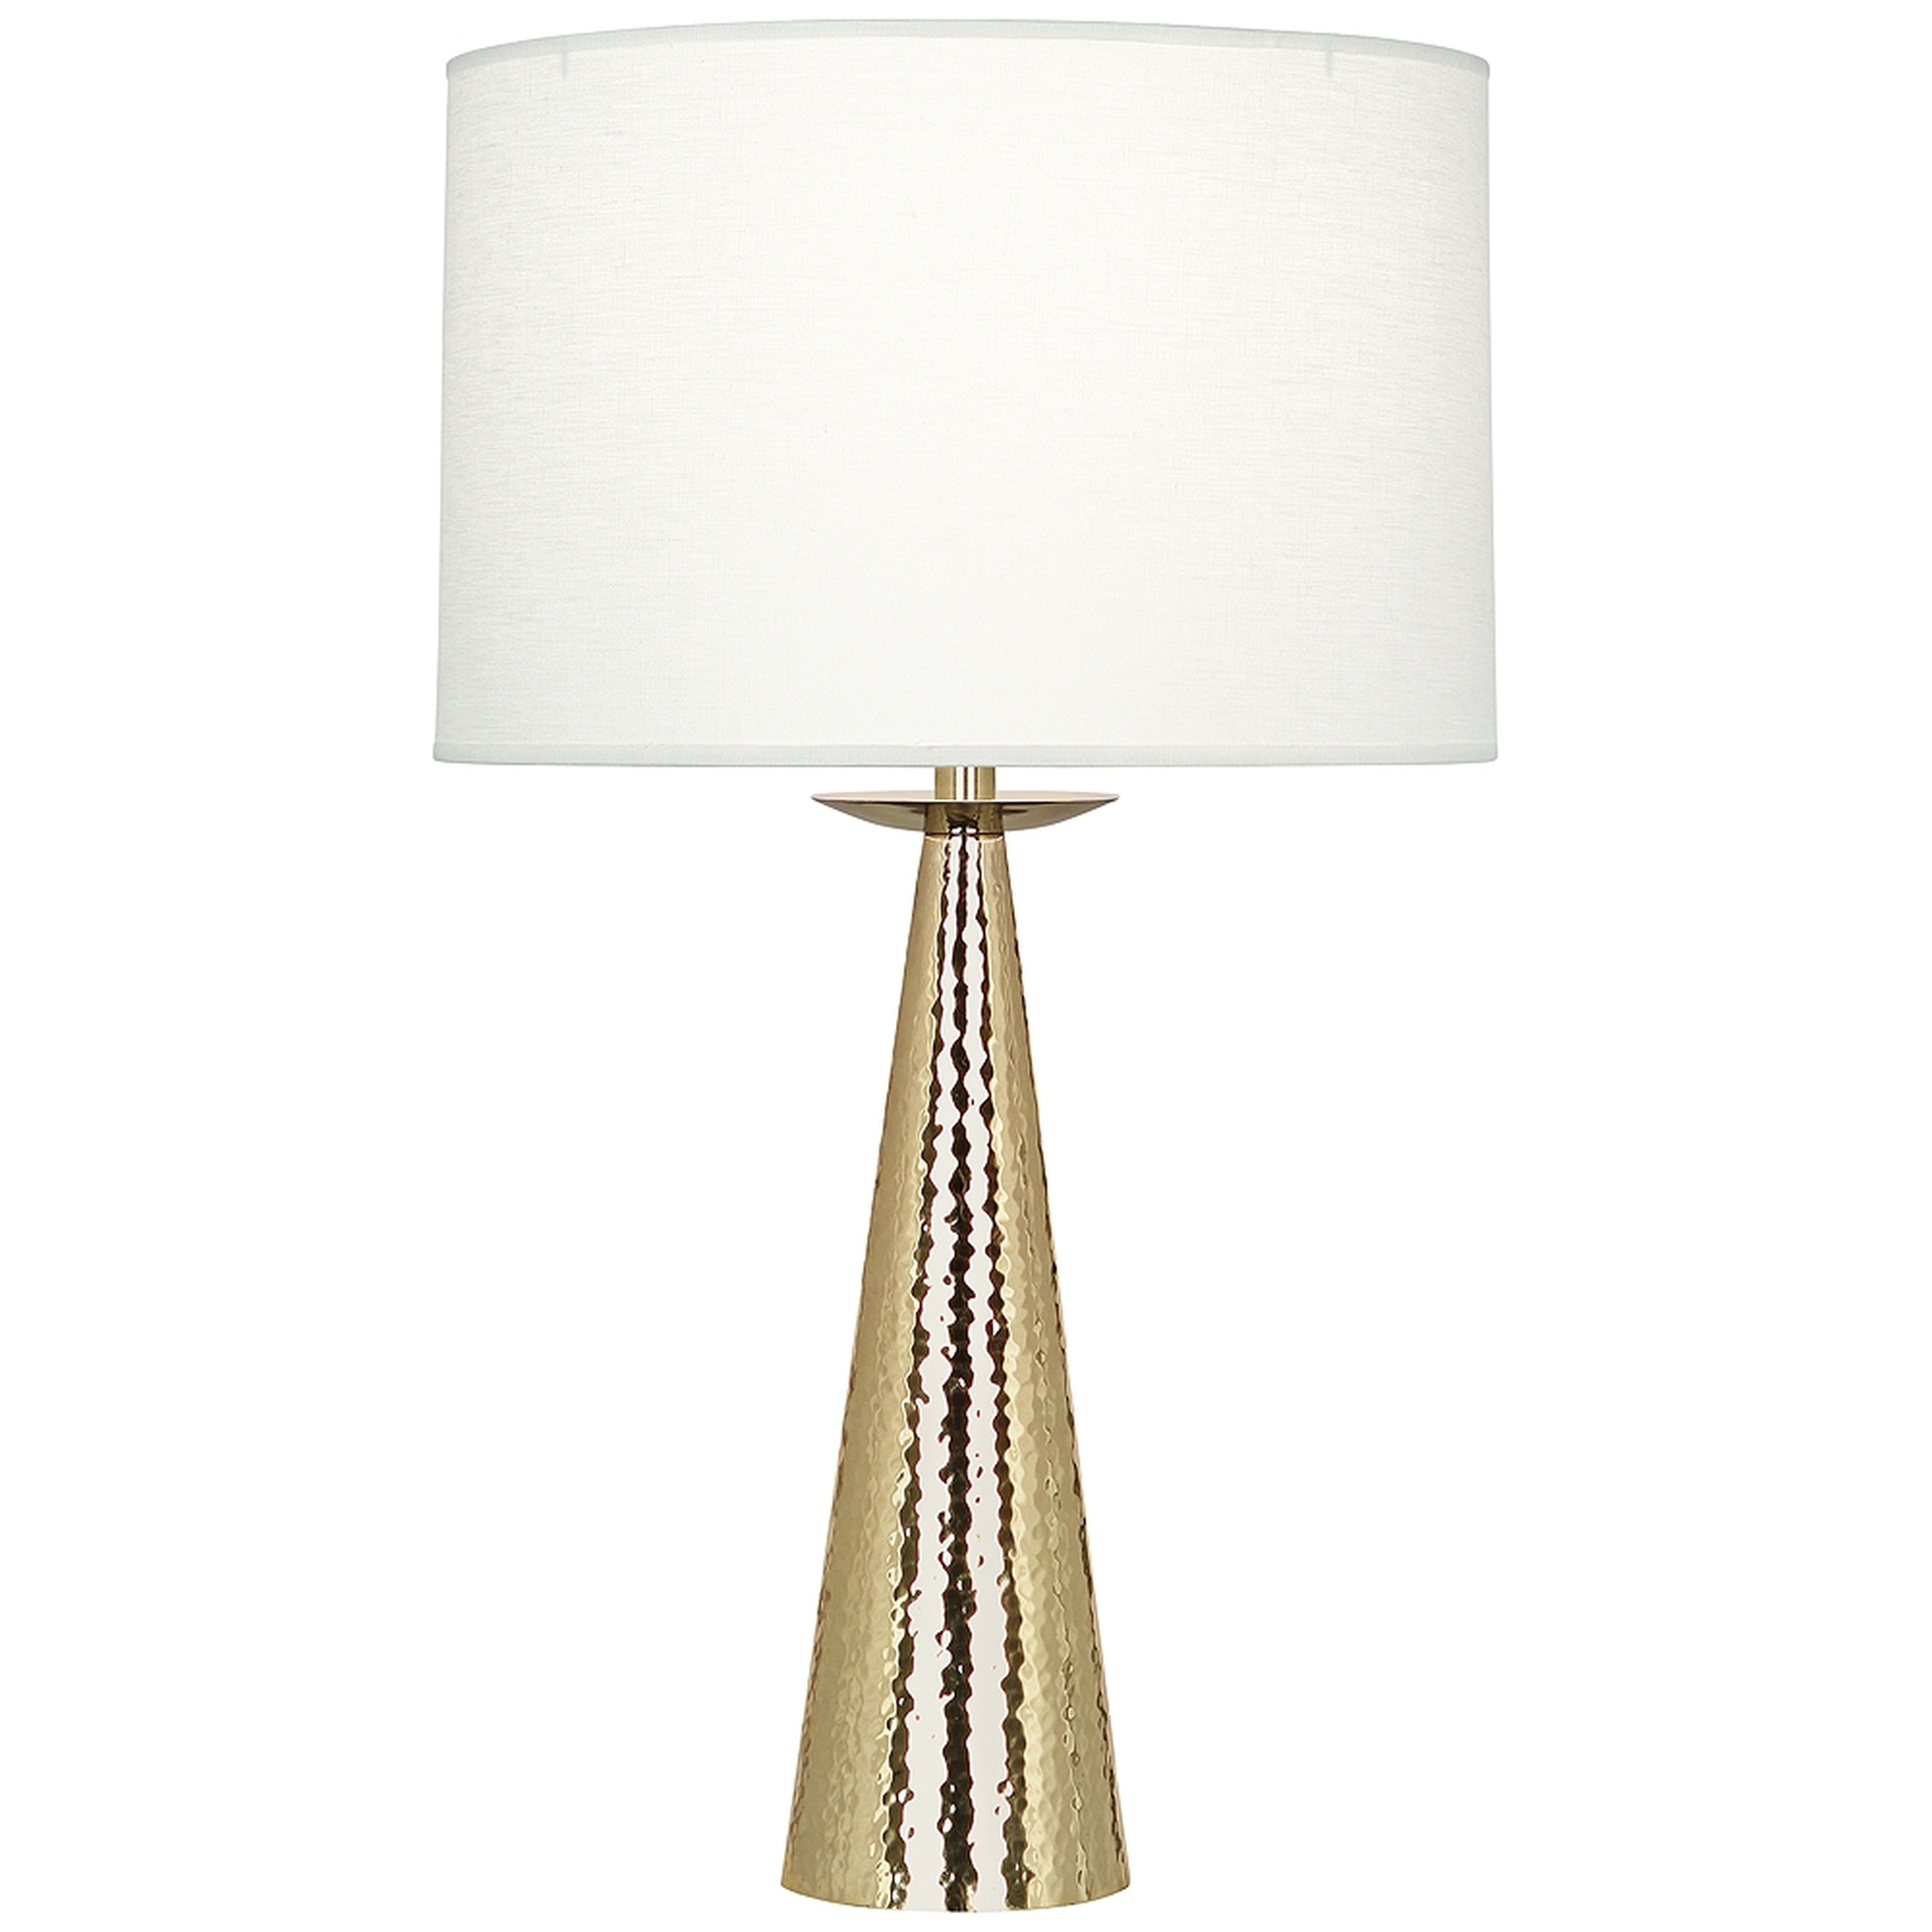 Robert Abbey Dal Modern Brass Table Lamp - Style # 35C40 - Lamps Plus